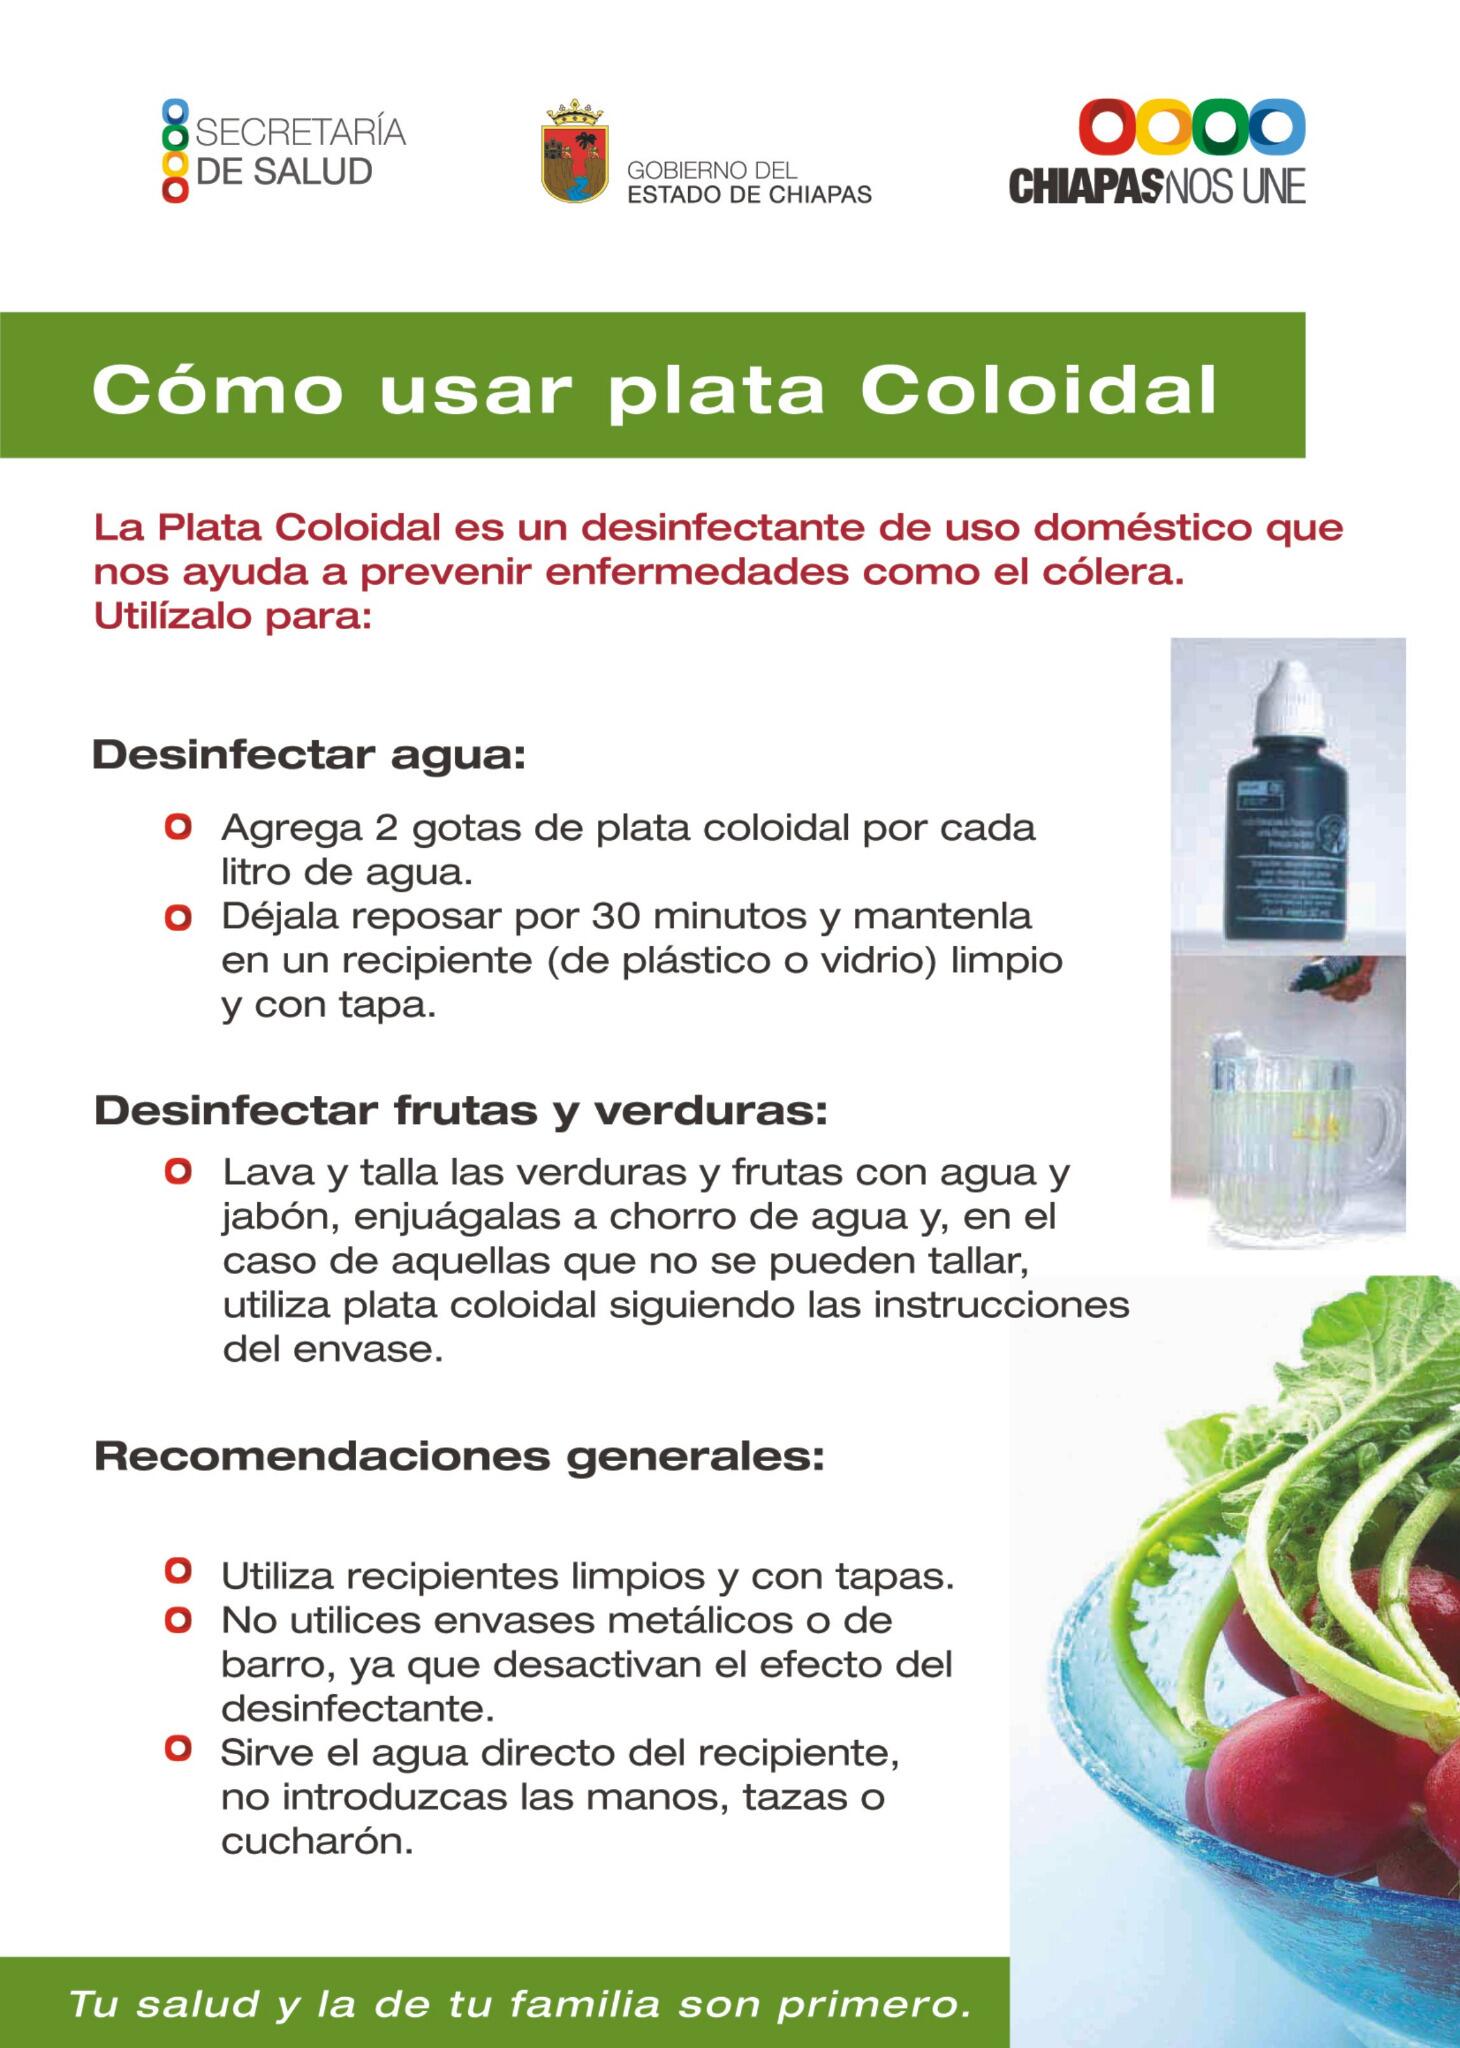 Salud Chiapas Oficial on X: La Plata Coloidal es un desinfectante que  ayuda a prevenir enfermedades diarreicas #MedidasContraelCólera #Chiapas   / X